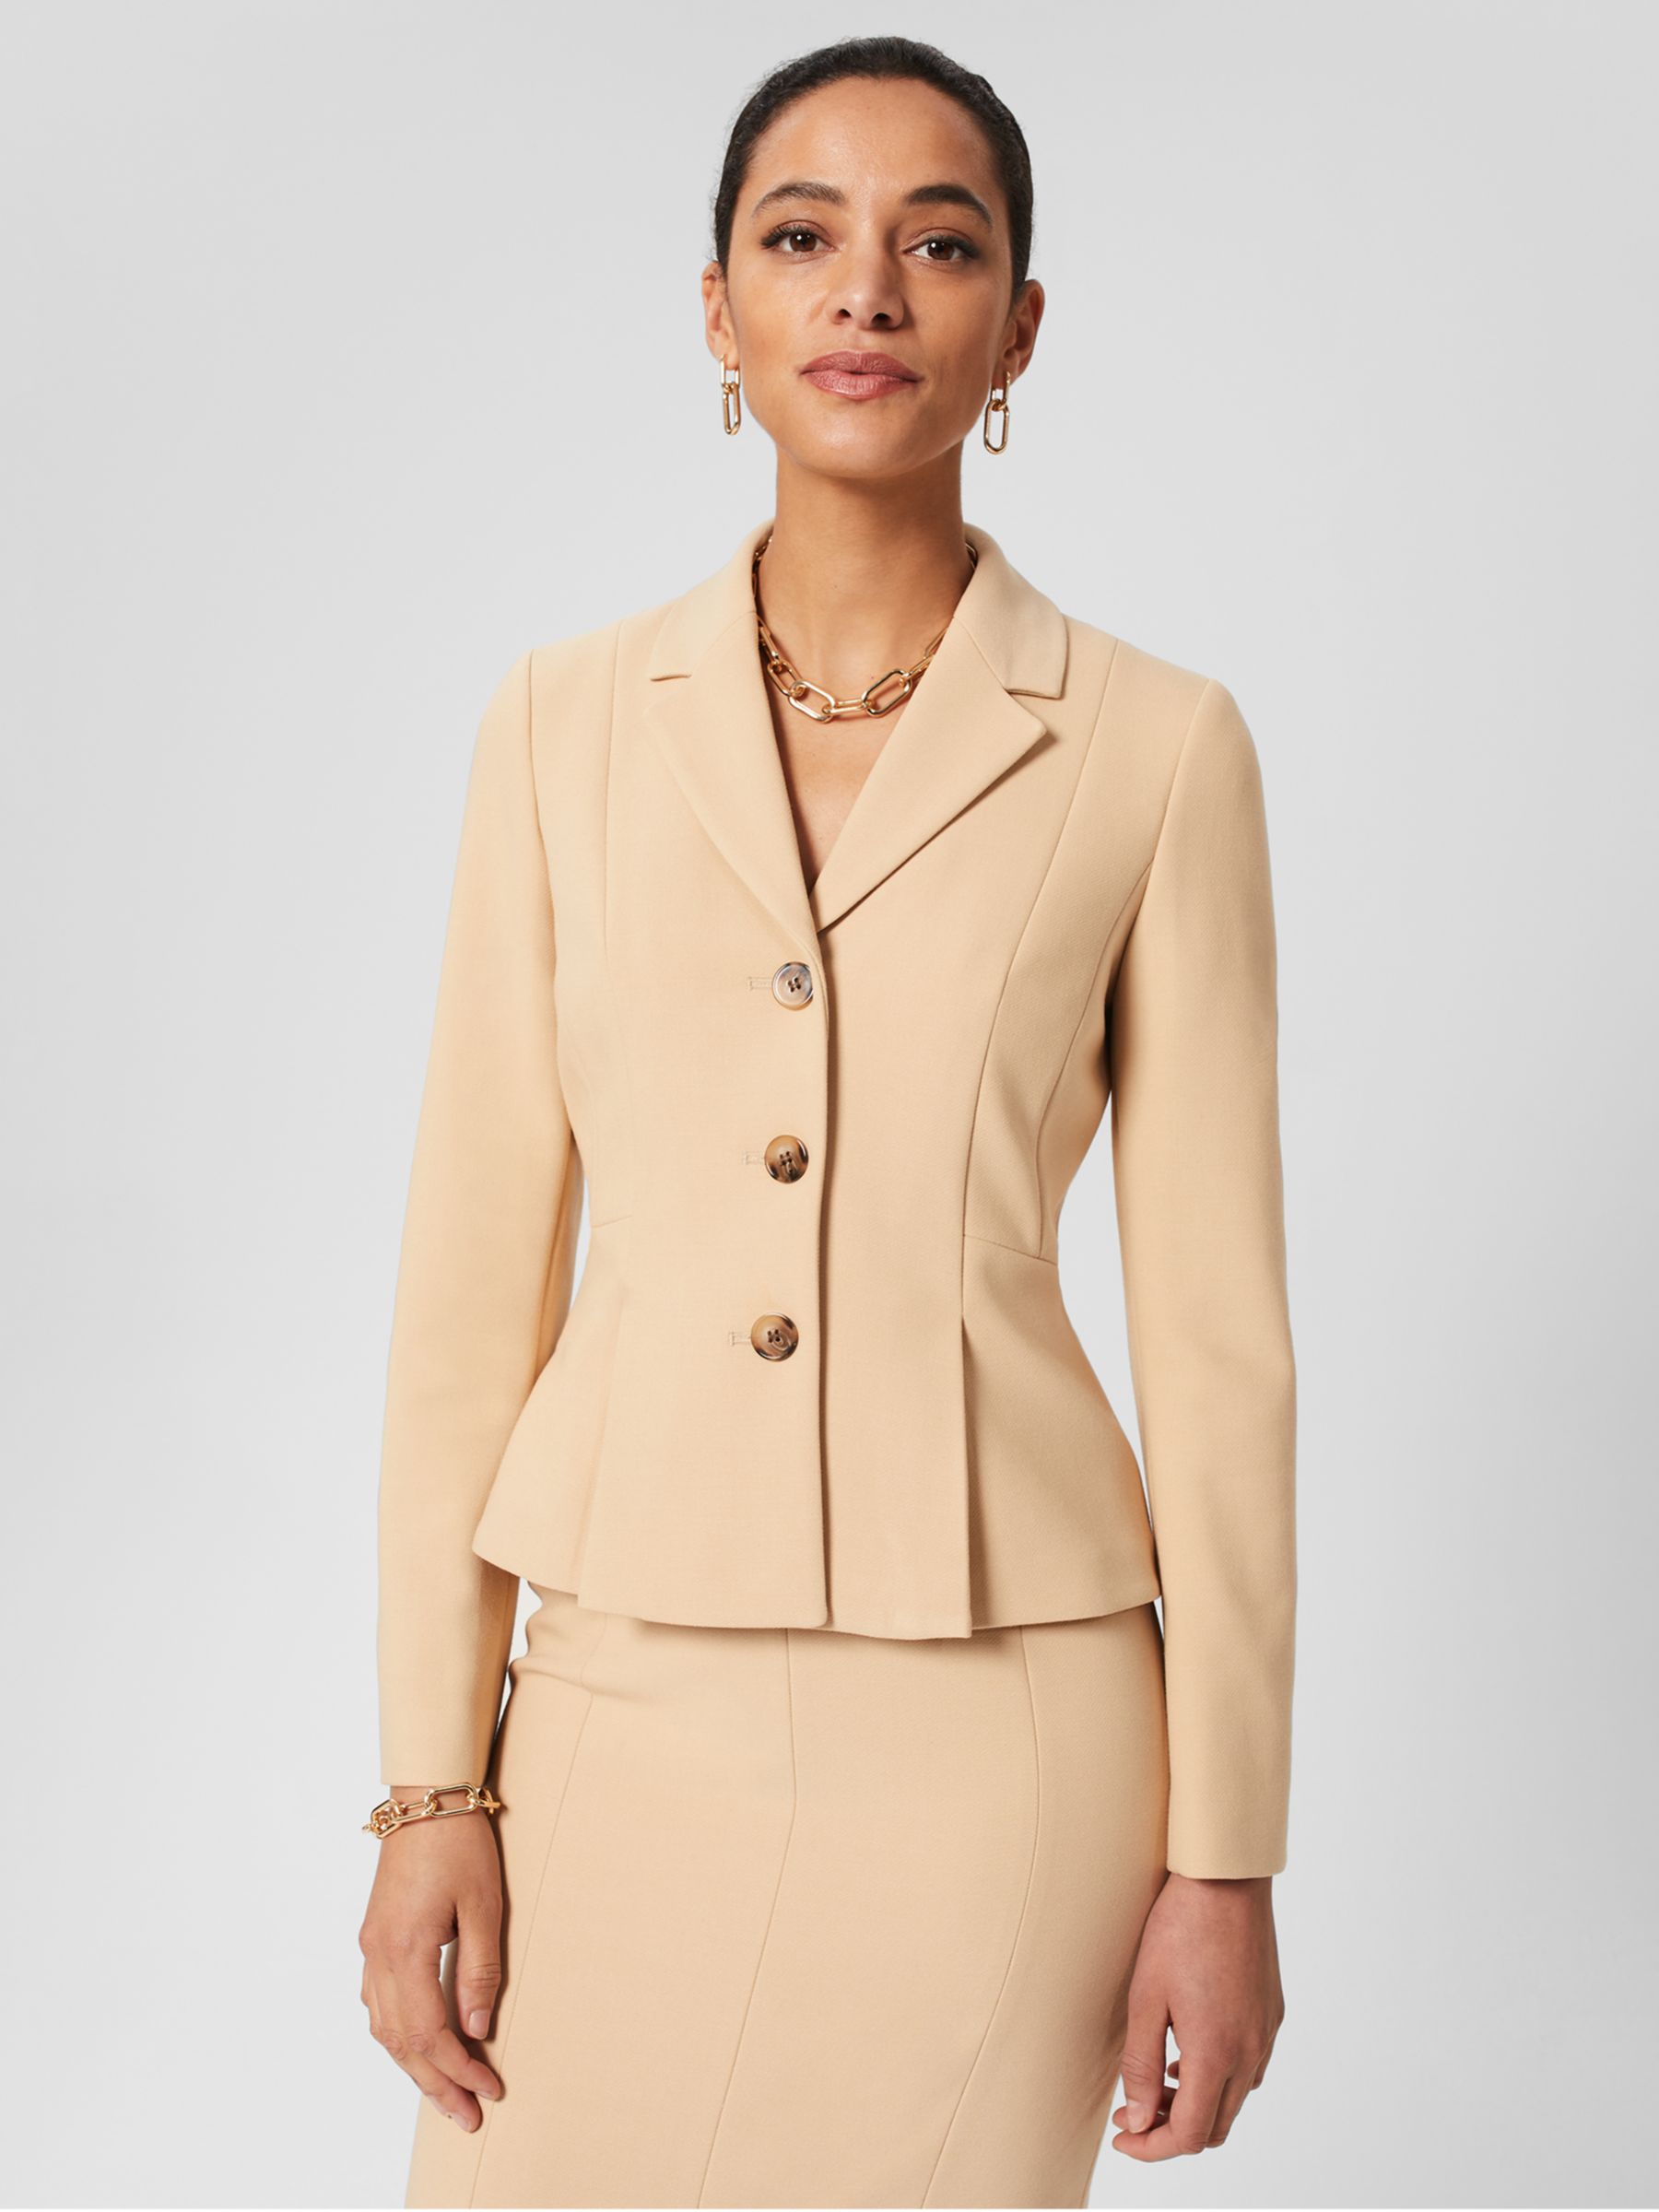 Calvin Klein Women's Two Button Lux Blazer (Petite, Standard